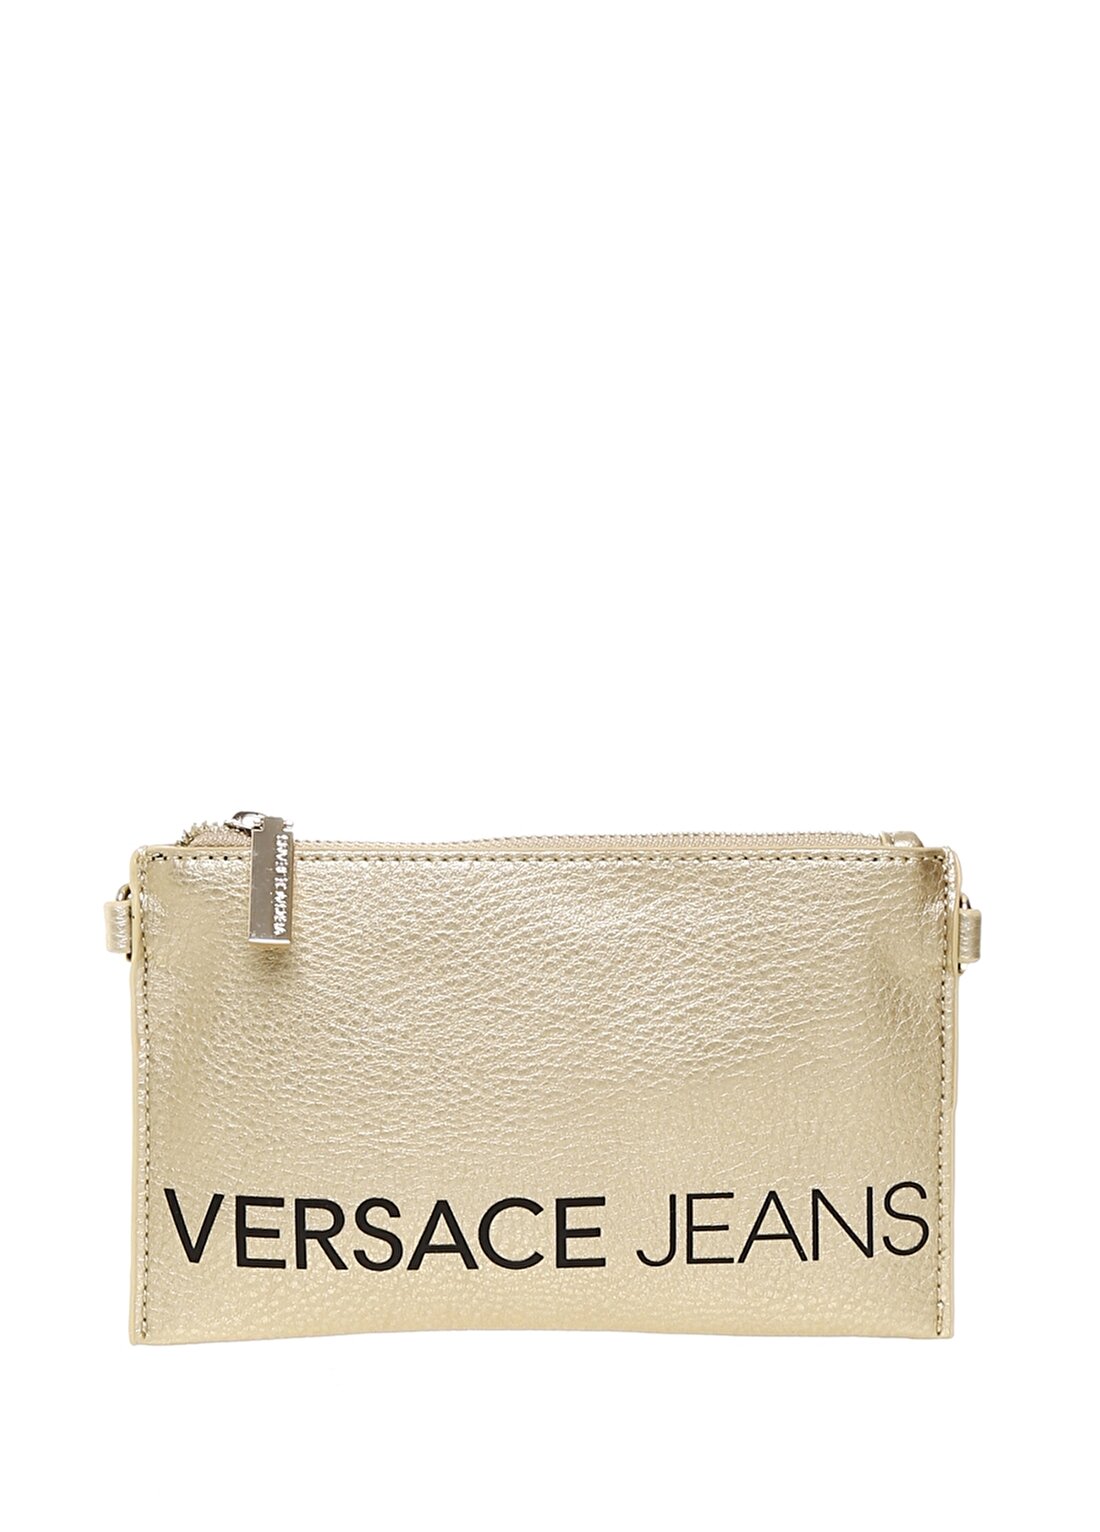 Versace Jeans Gold Cüzdan